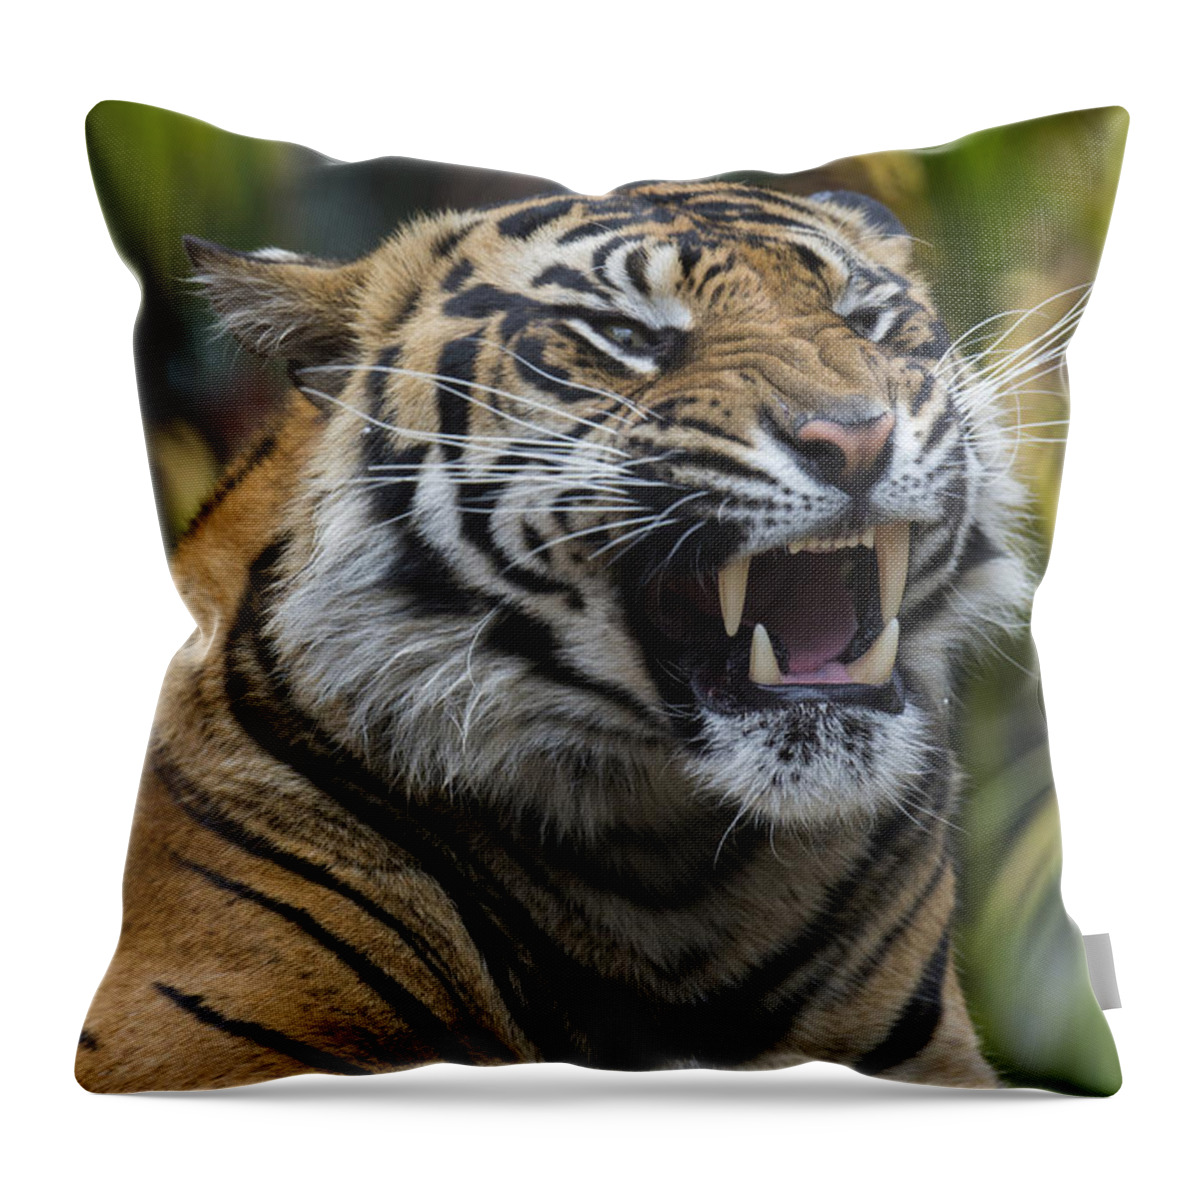 San Diego Zoo Throw Pillow featuring the photograph Sumatran Tiger by San Diego Zoo